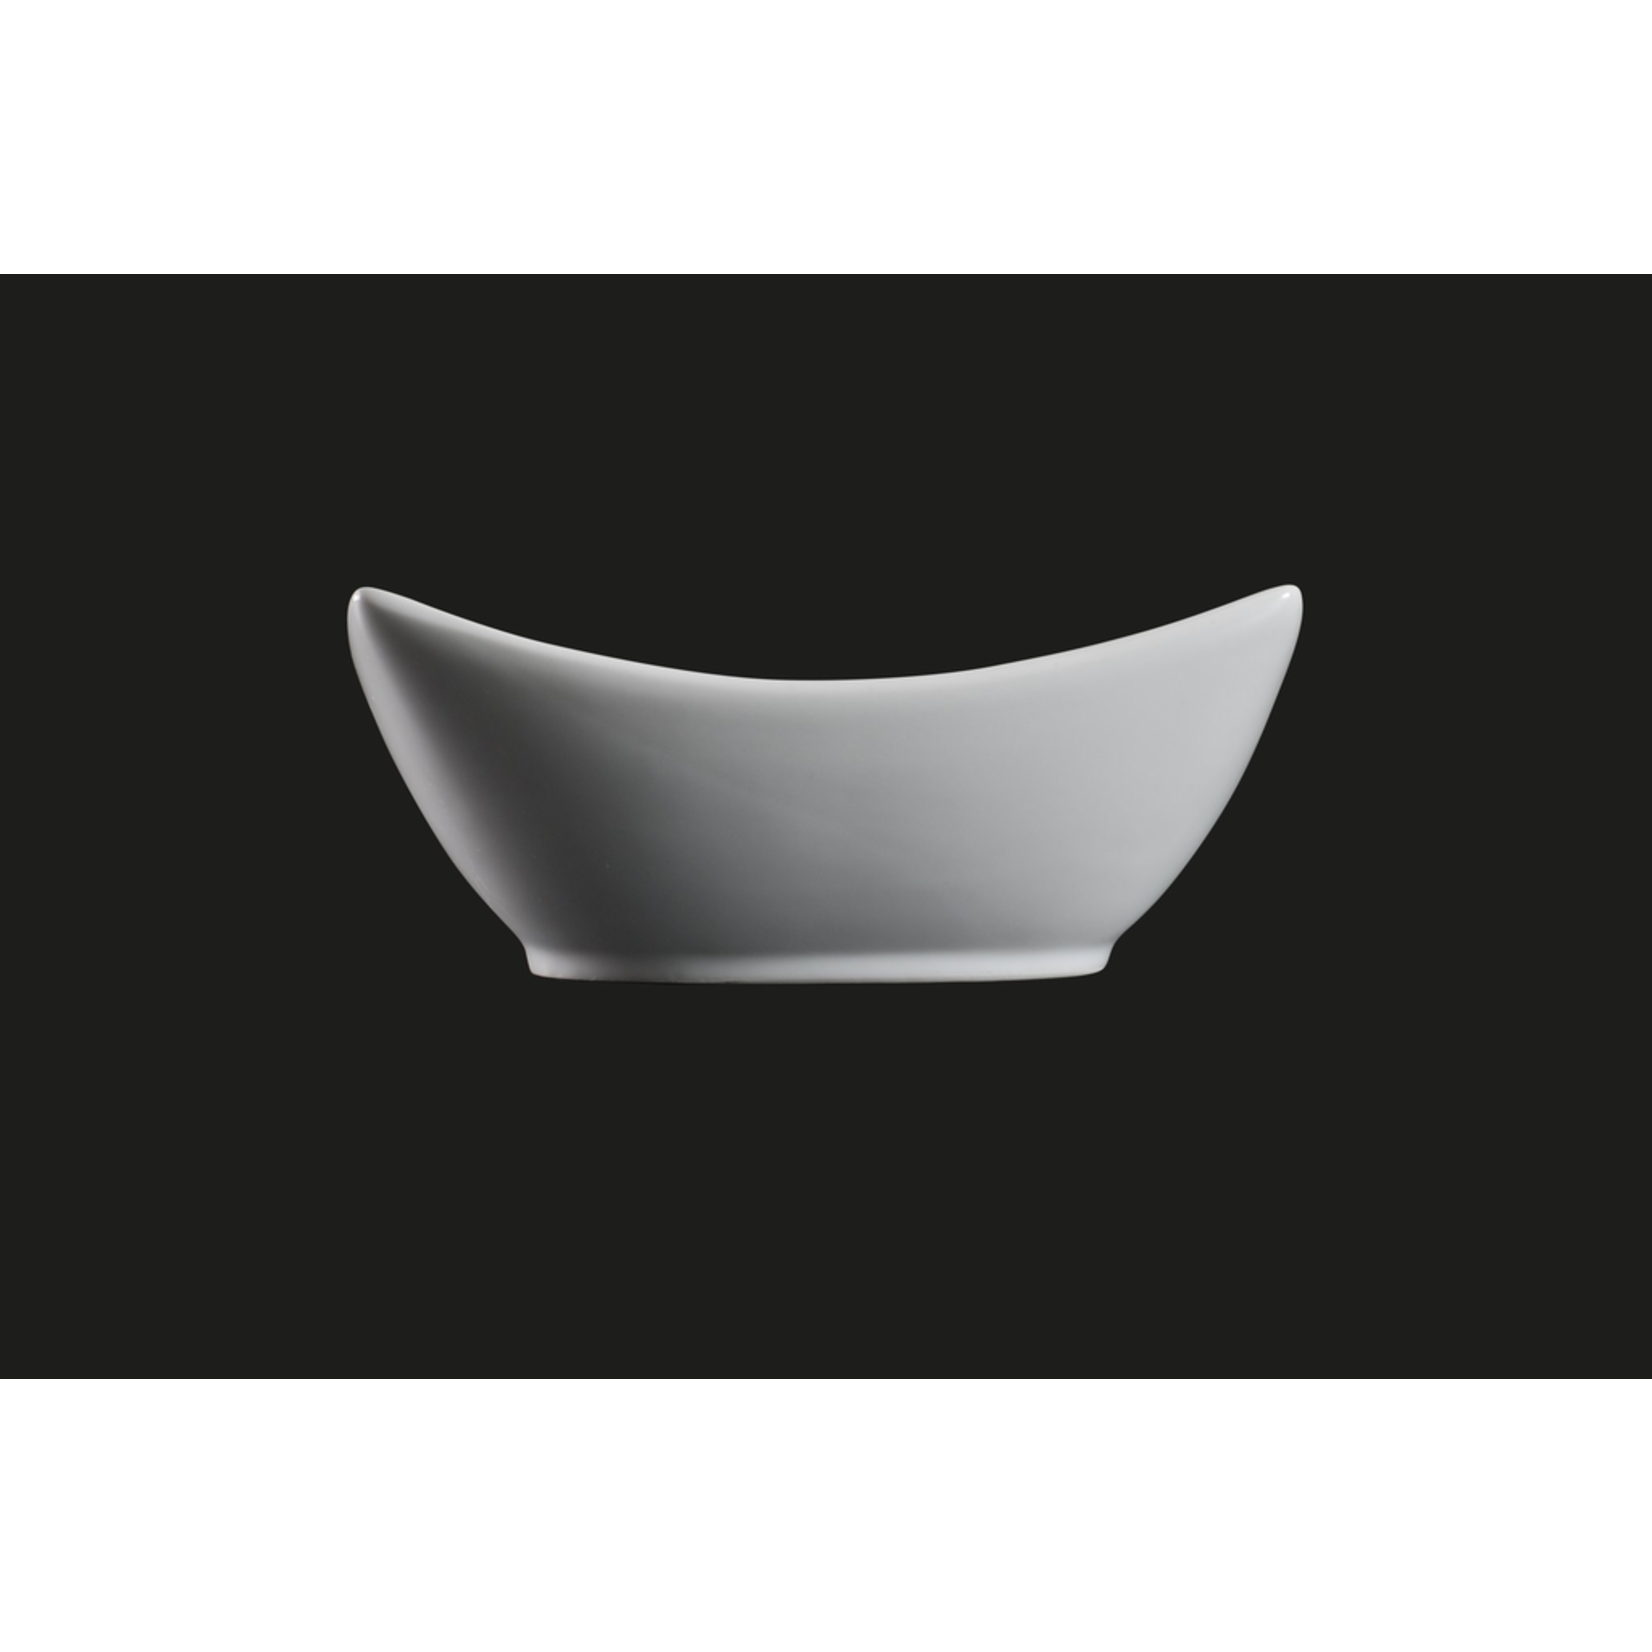 Palate and Plate AW-0290 Rect bowl 6 x 5.25” 10.5 oz  24/cs